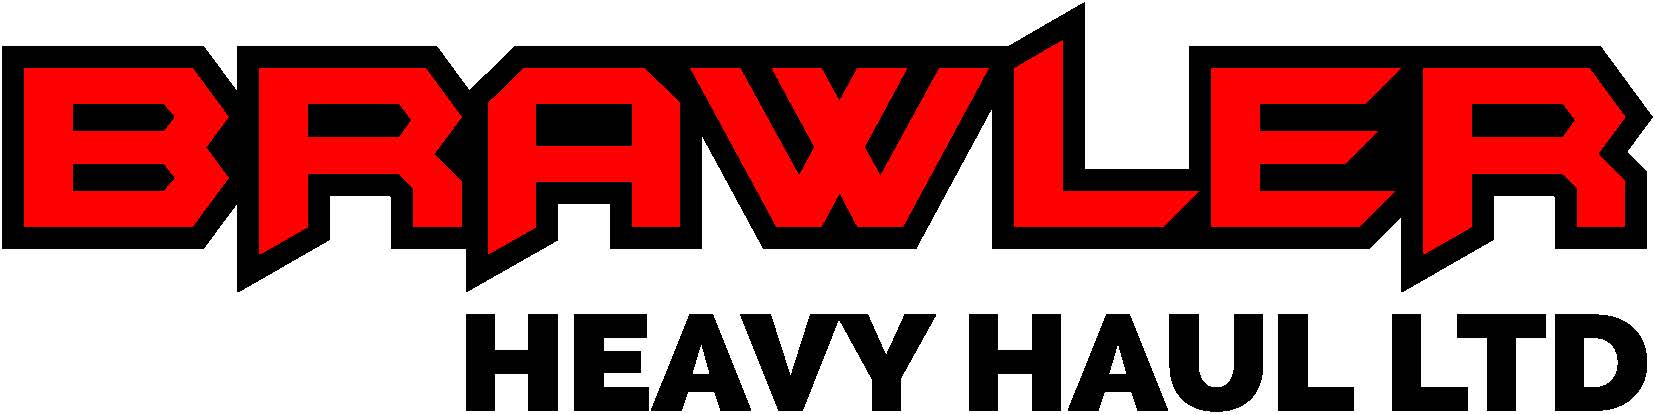 Brawler Heavy Haul Logo 2